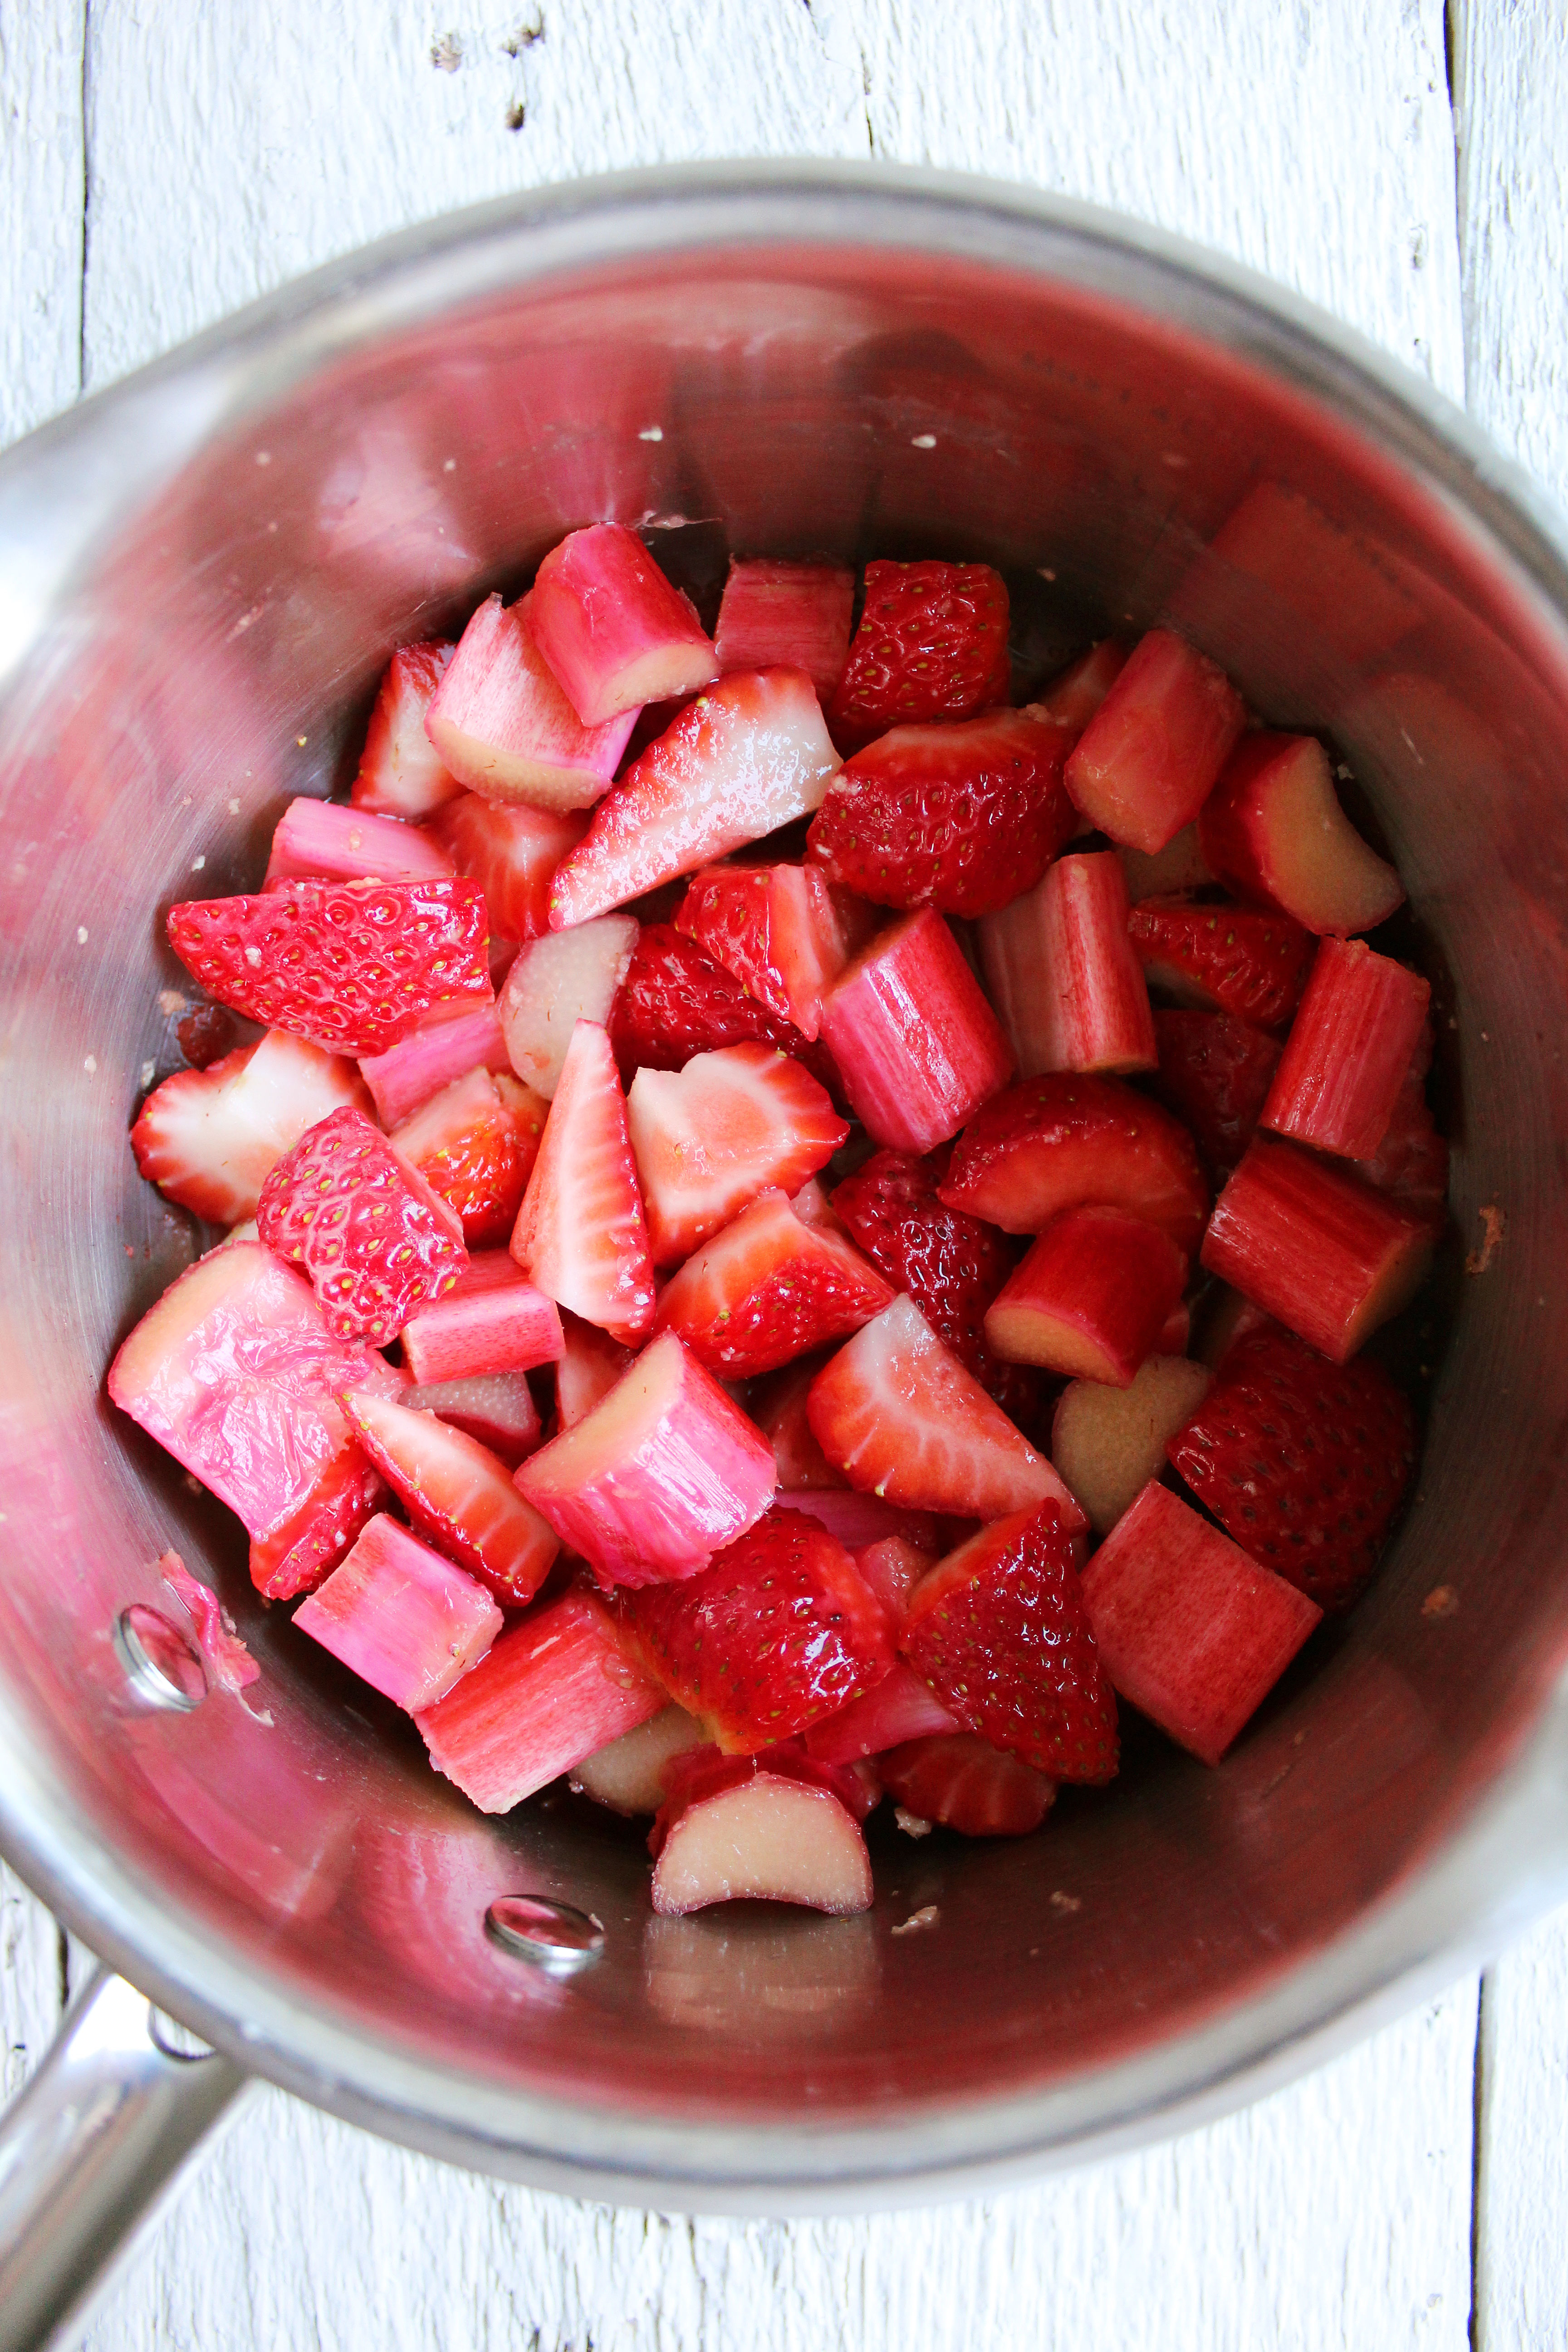 Quinoa Breakfast Bowls w/ Strawberry Rhubarb Compote! Spring-inspired, naturally sweetened, and SO YUM! #vegan #glutenfree #recipe | peachandthecobbler.com